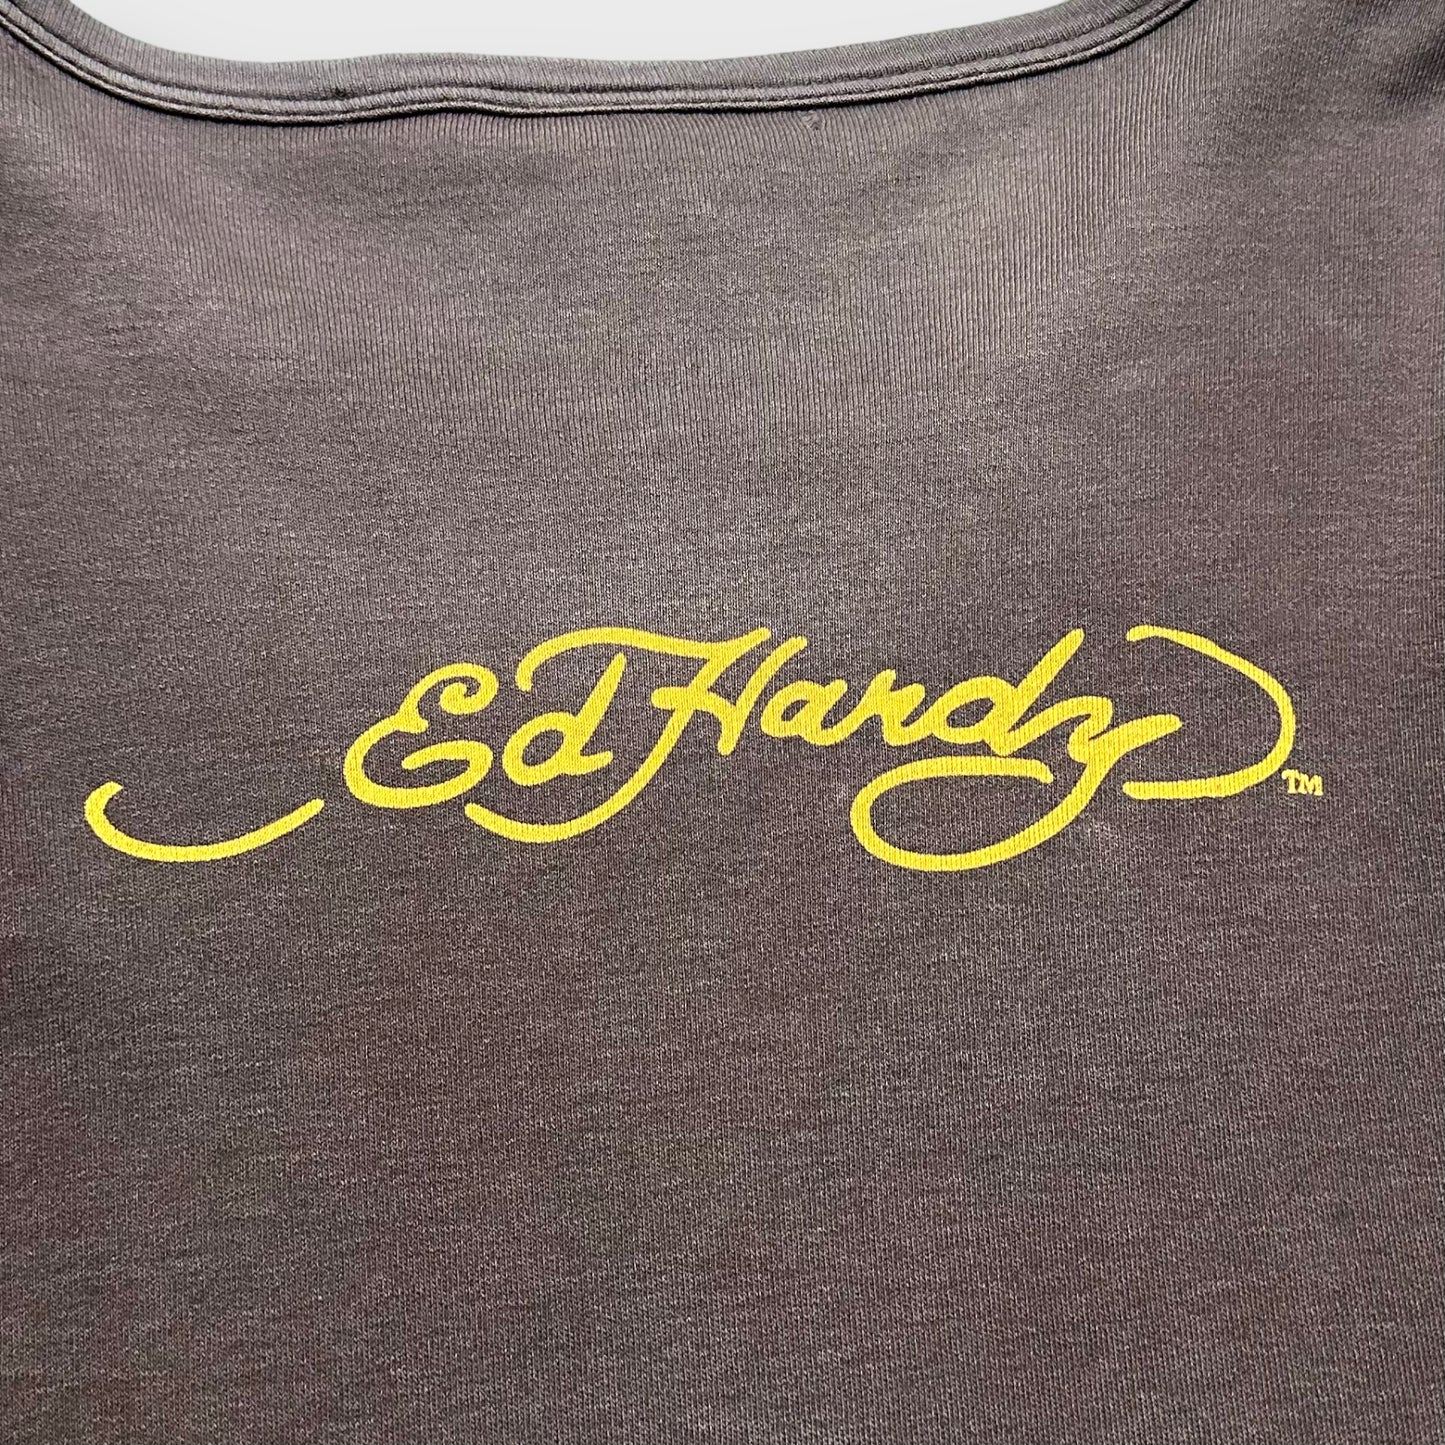 "Ed Hardy" Skull design l/s t-shirt